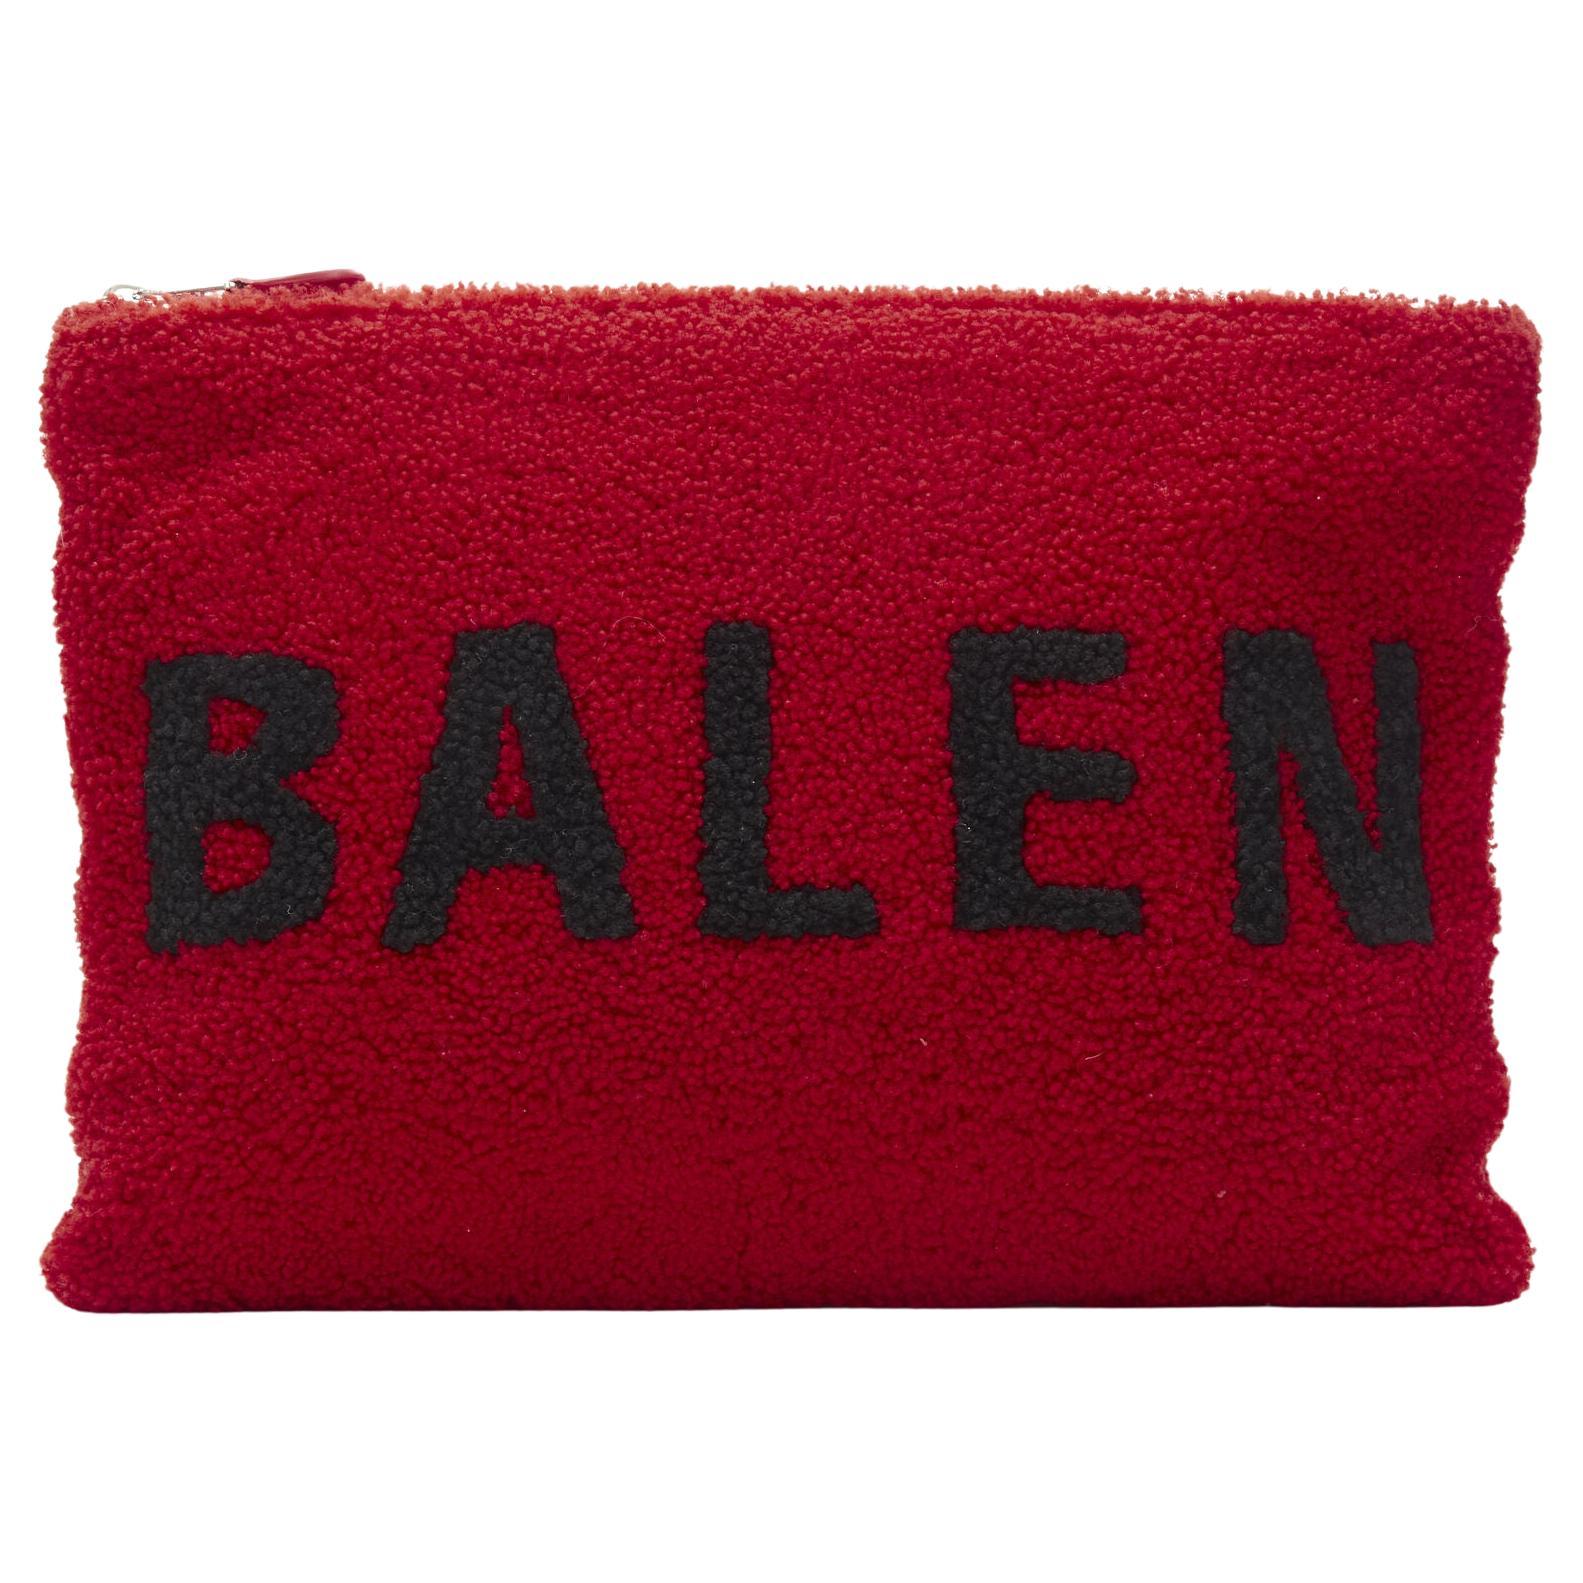 new BALENCIAGA Demna logo red black dyed merino lamb shearling zip clutch bag For Sale